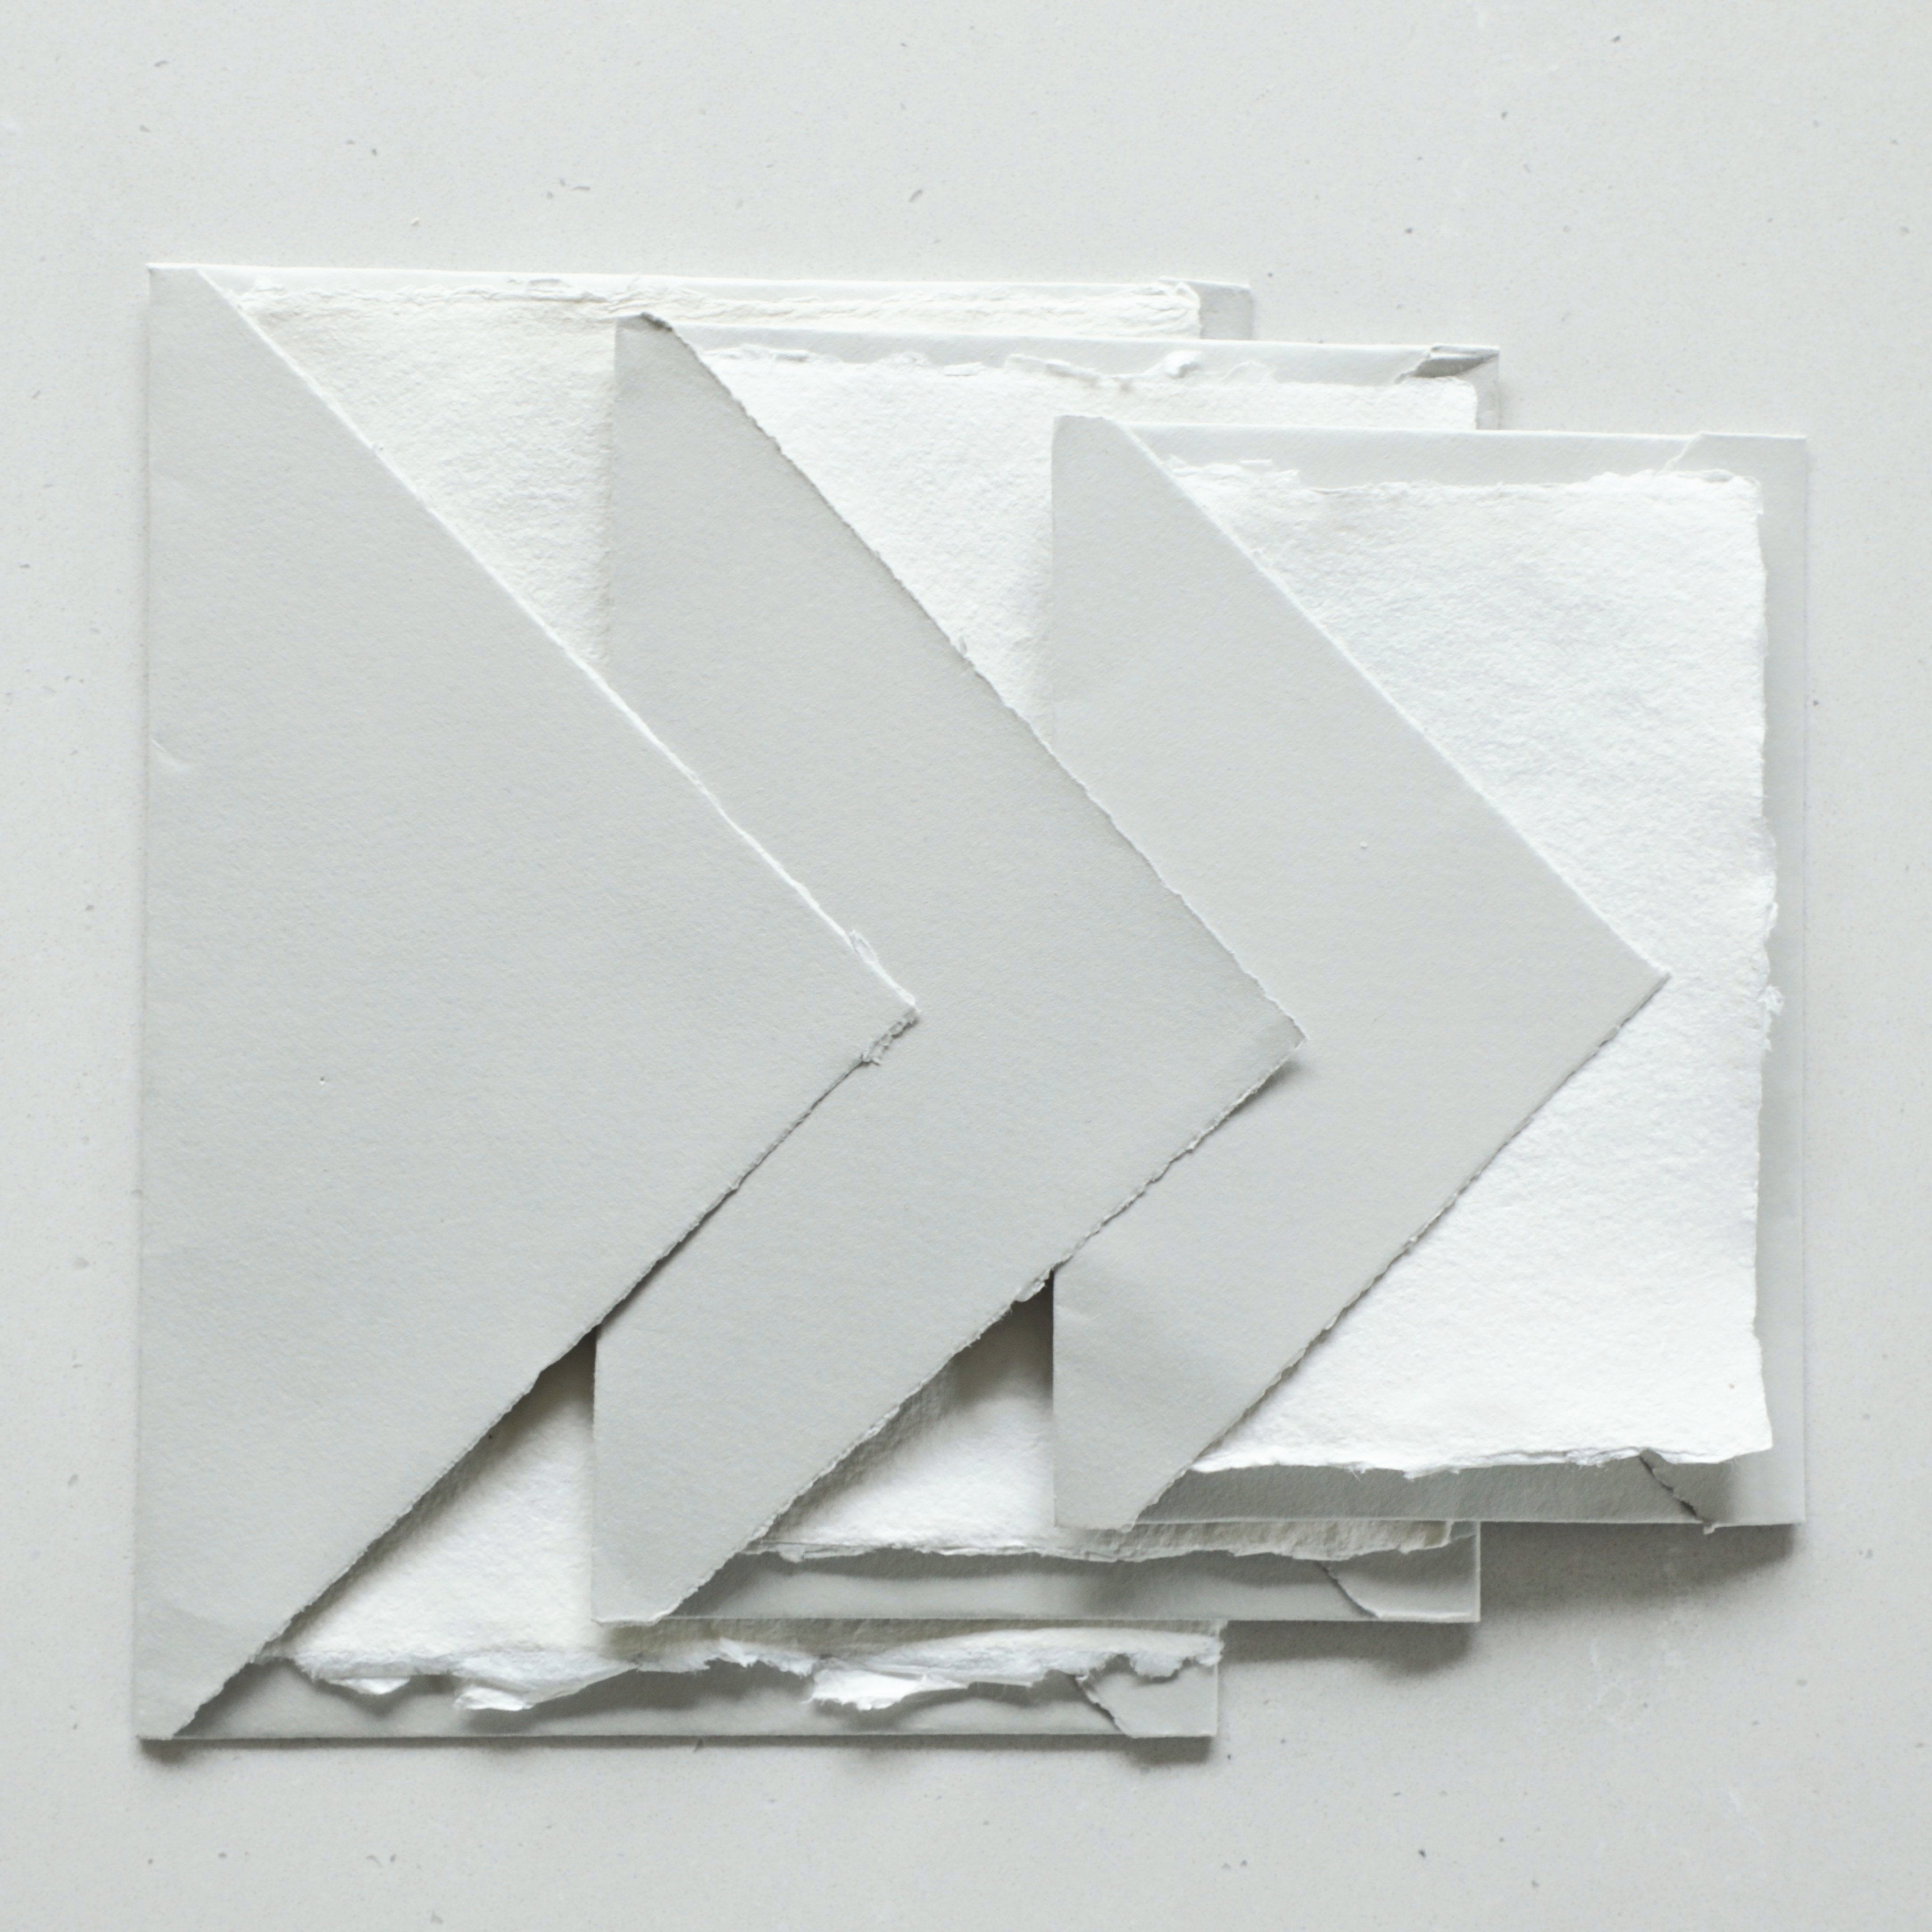 Marcello-art : Enveloppe rectangle A5 velin 162x229 mm couleur blanc